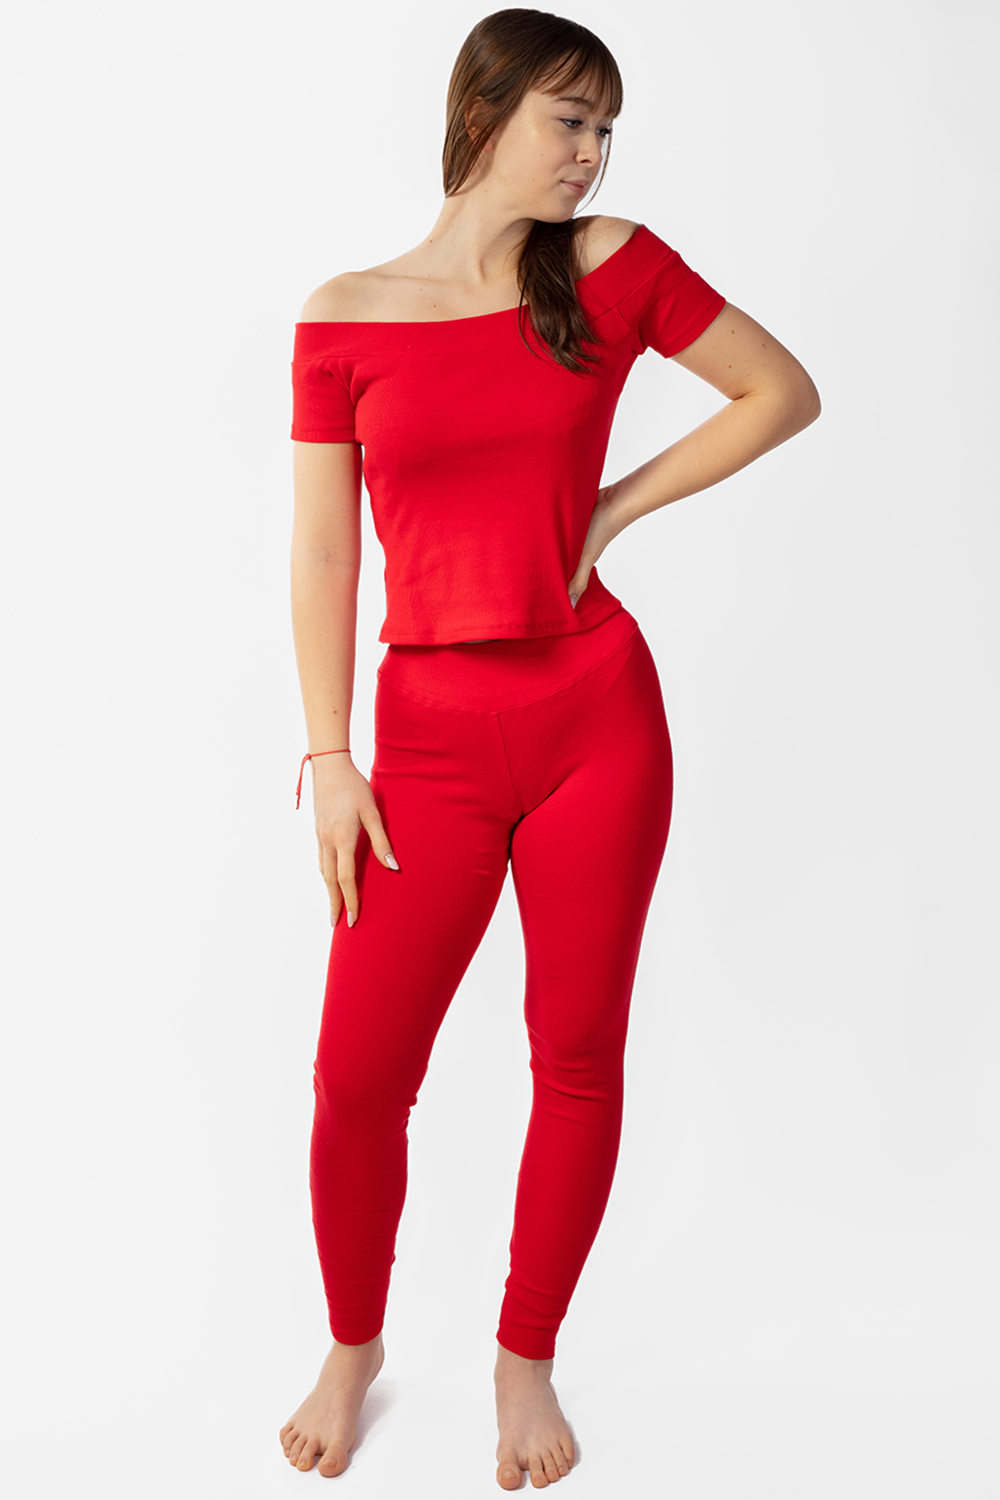 Dkaren Bayo-Kpl Komplet legginsy + bluzka, czerwony